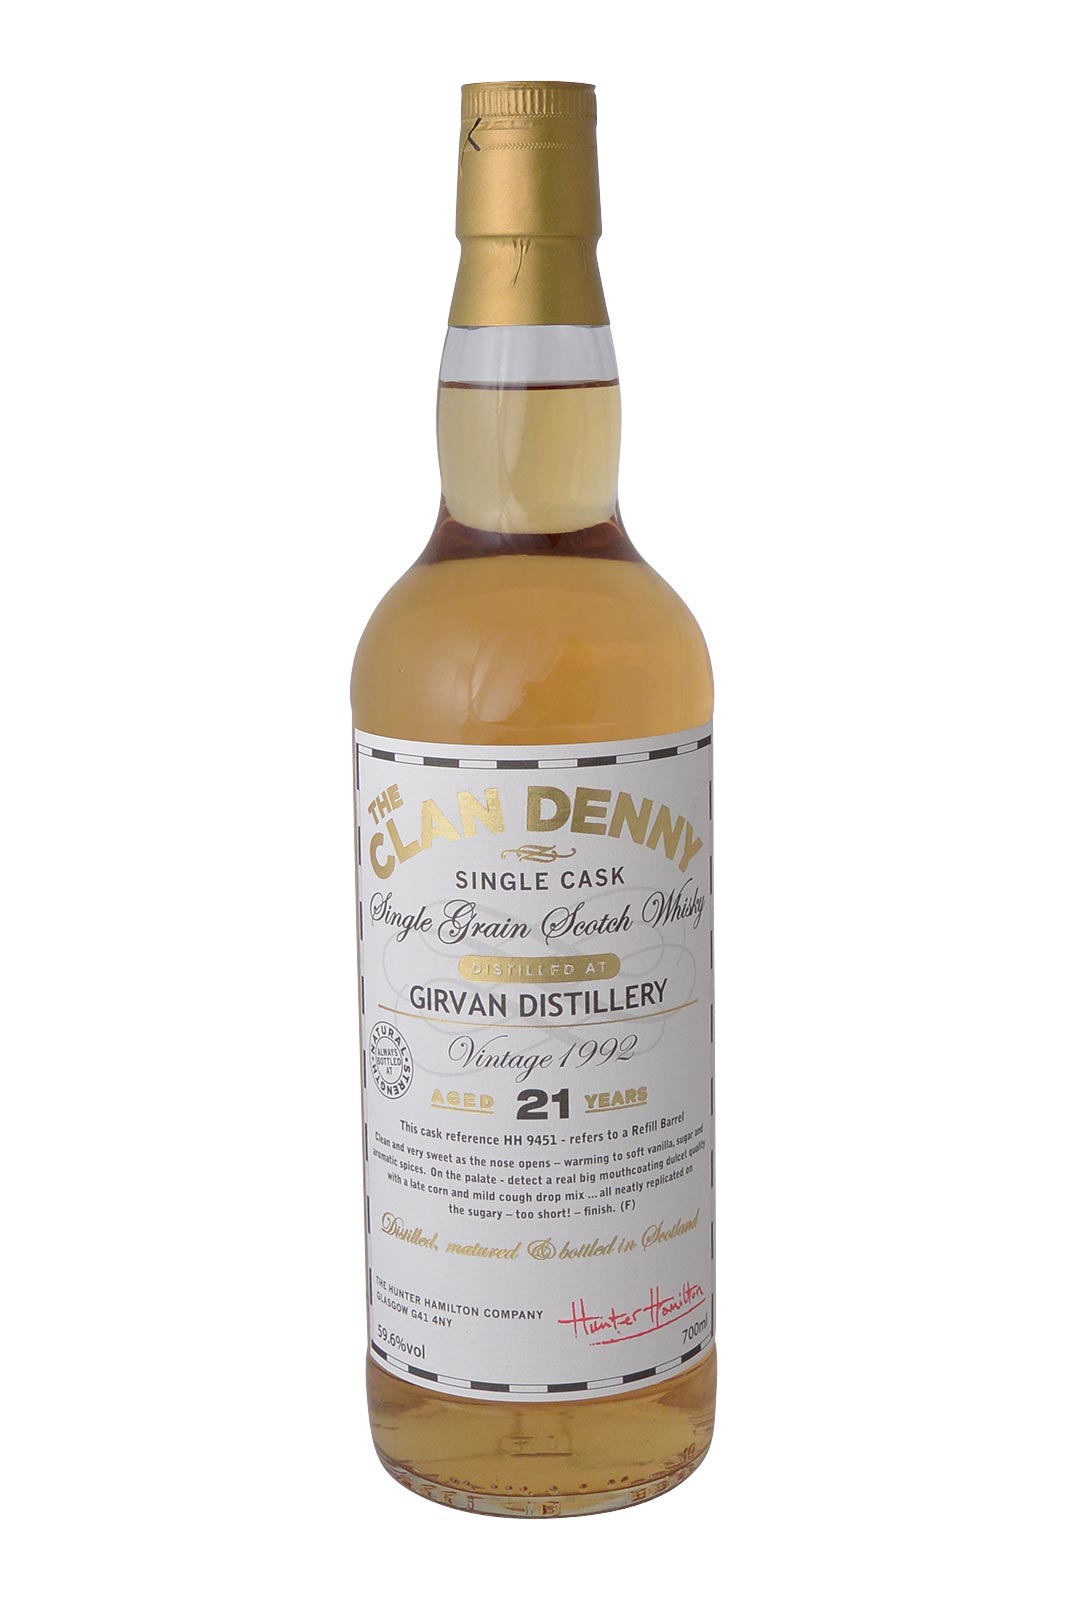 Clan Denny Girvan Distillery 21 Year Old